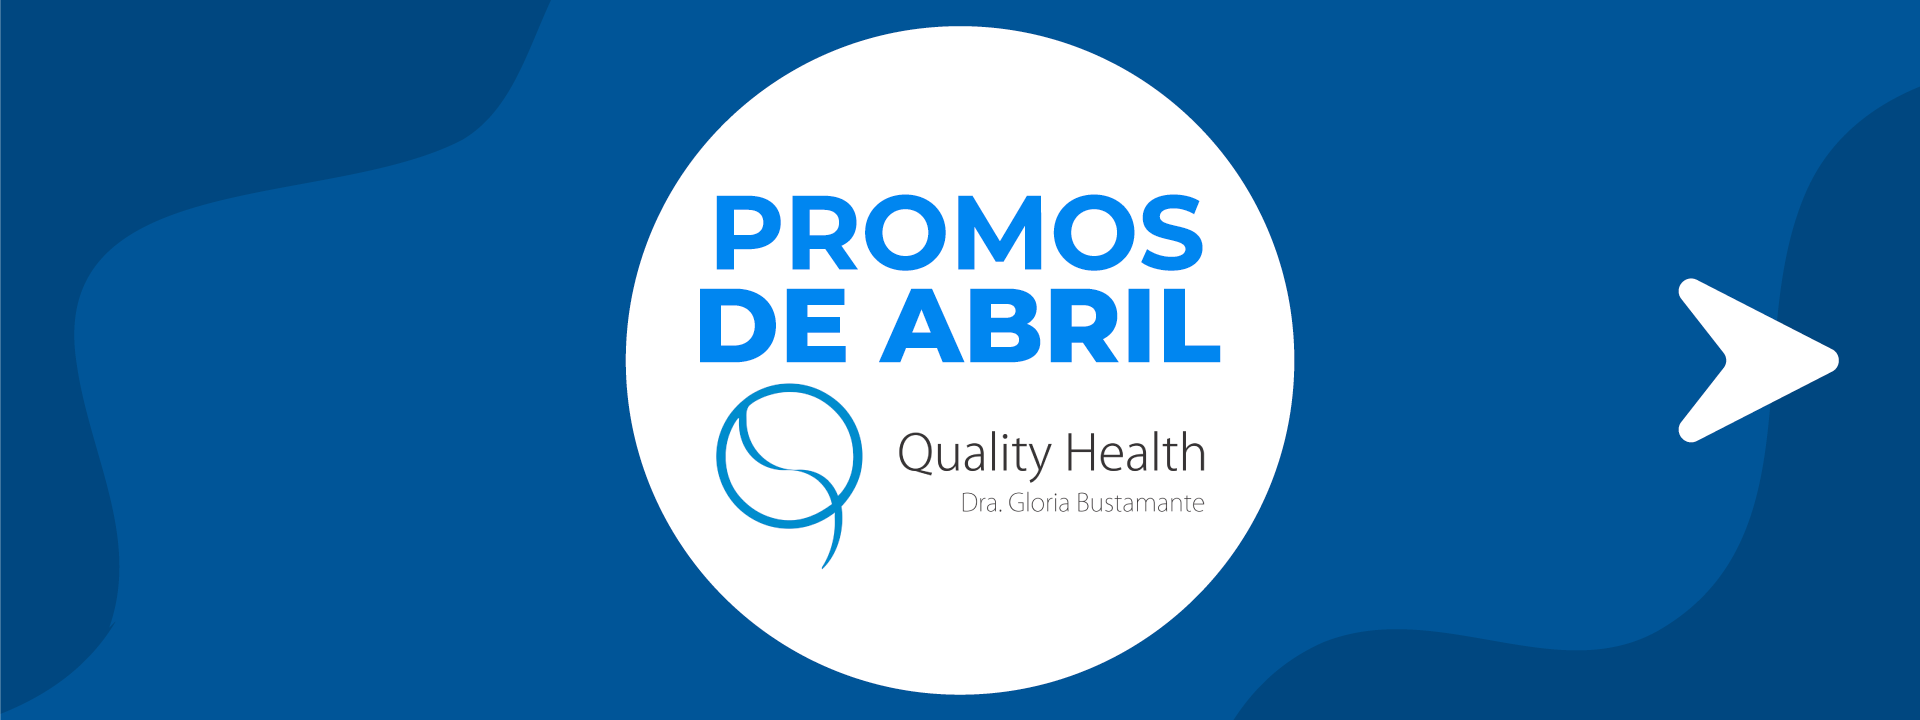 Banner-promos-abril-quality-health-medicina-estetica